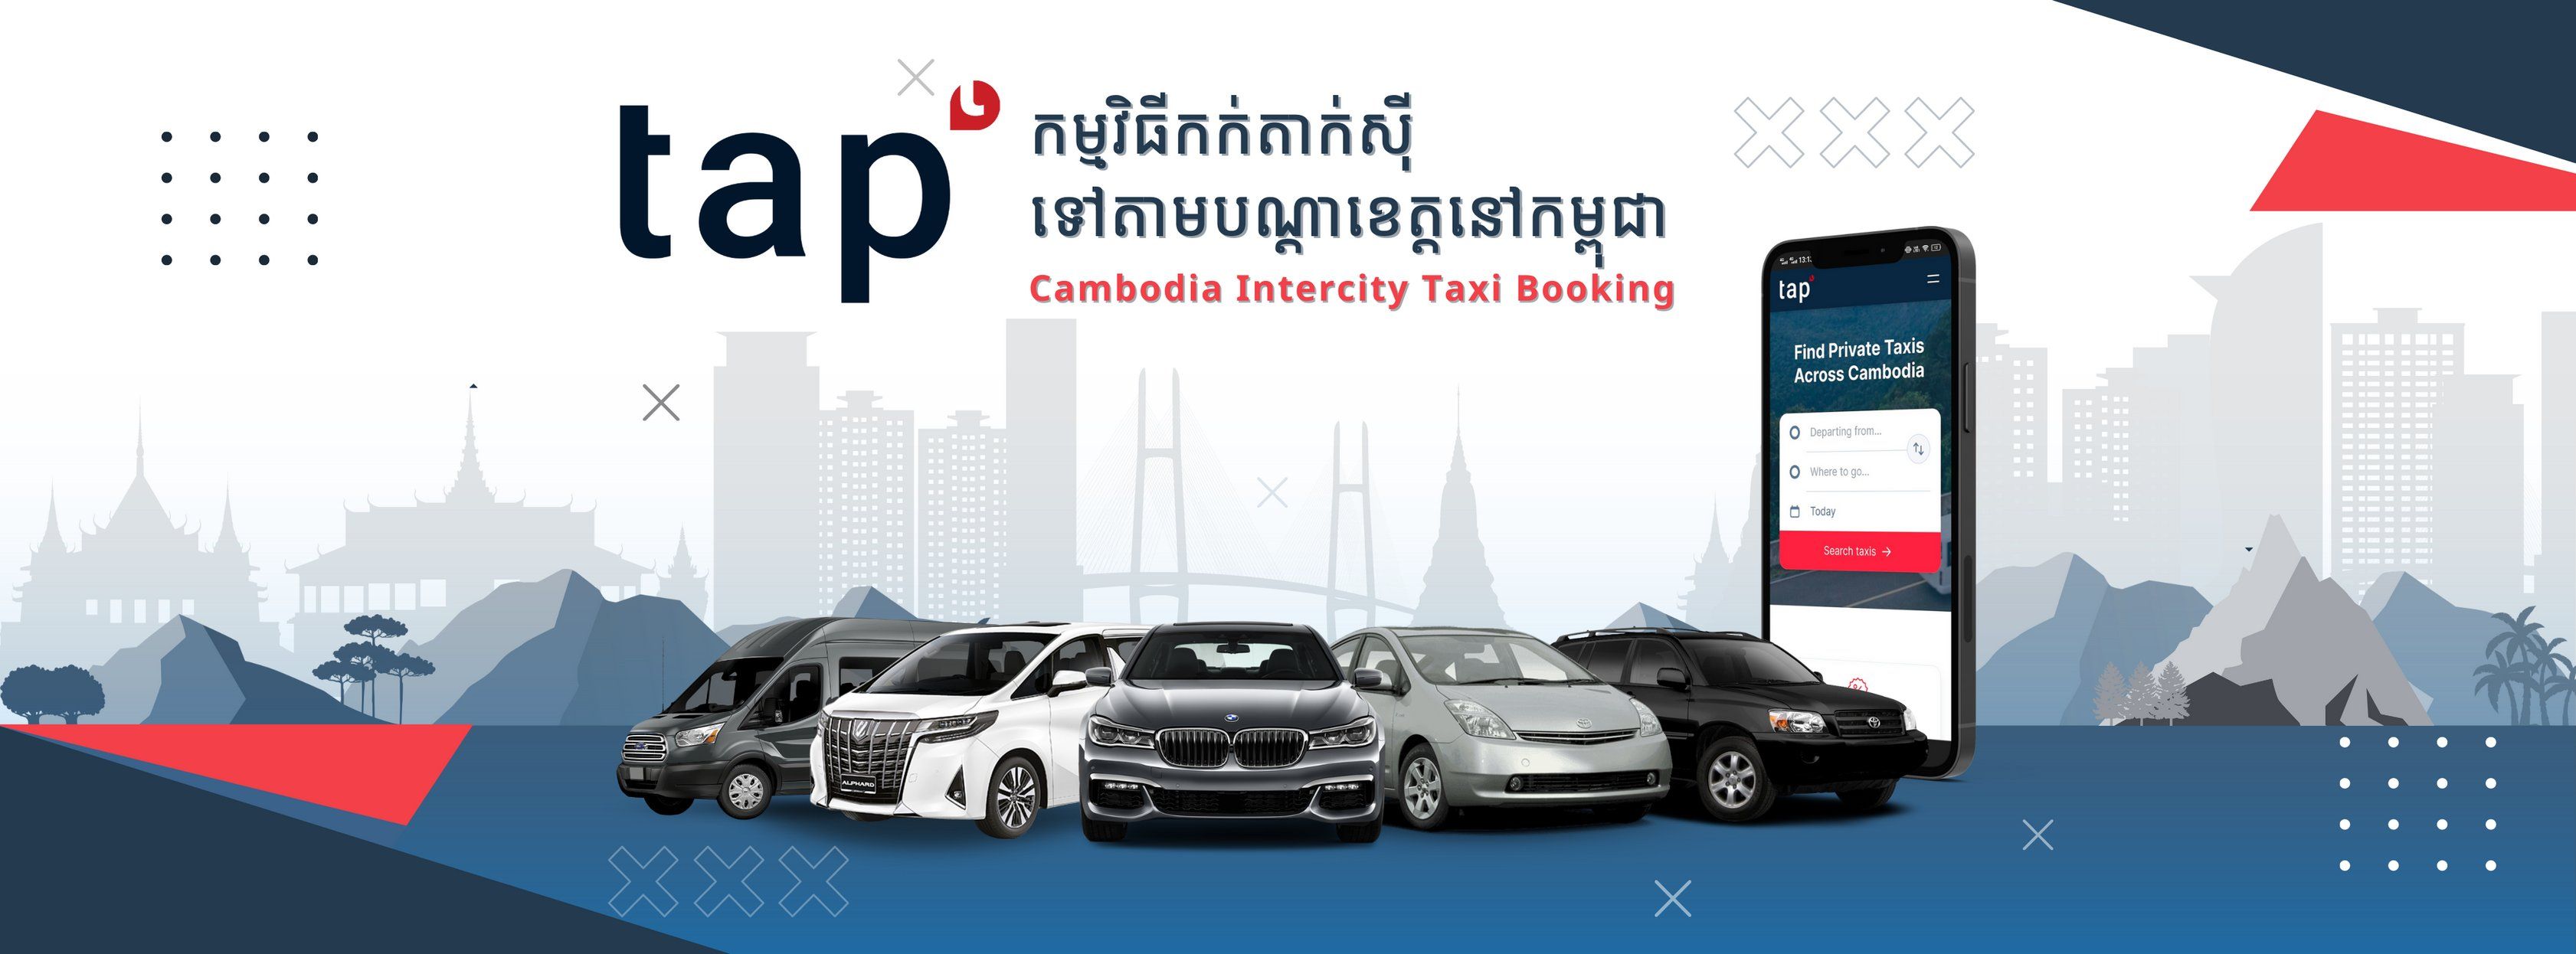 thai-viet-transfers-discount.webp